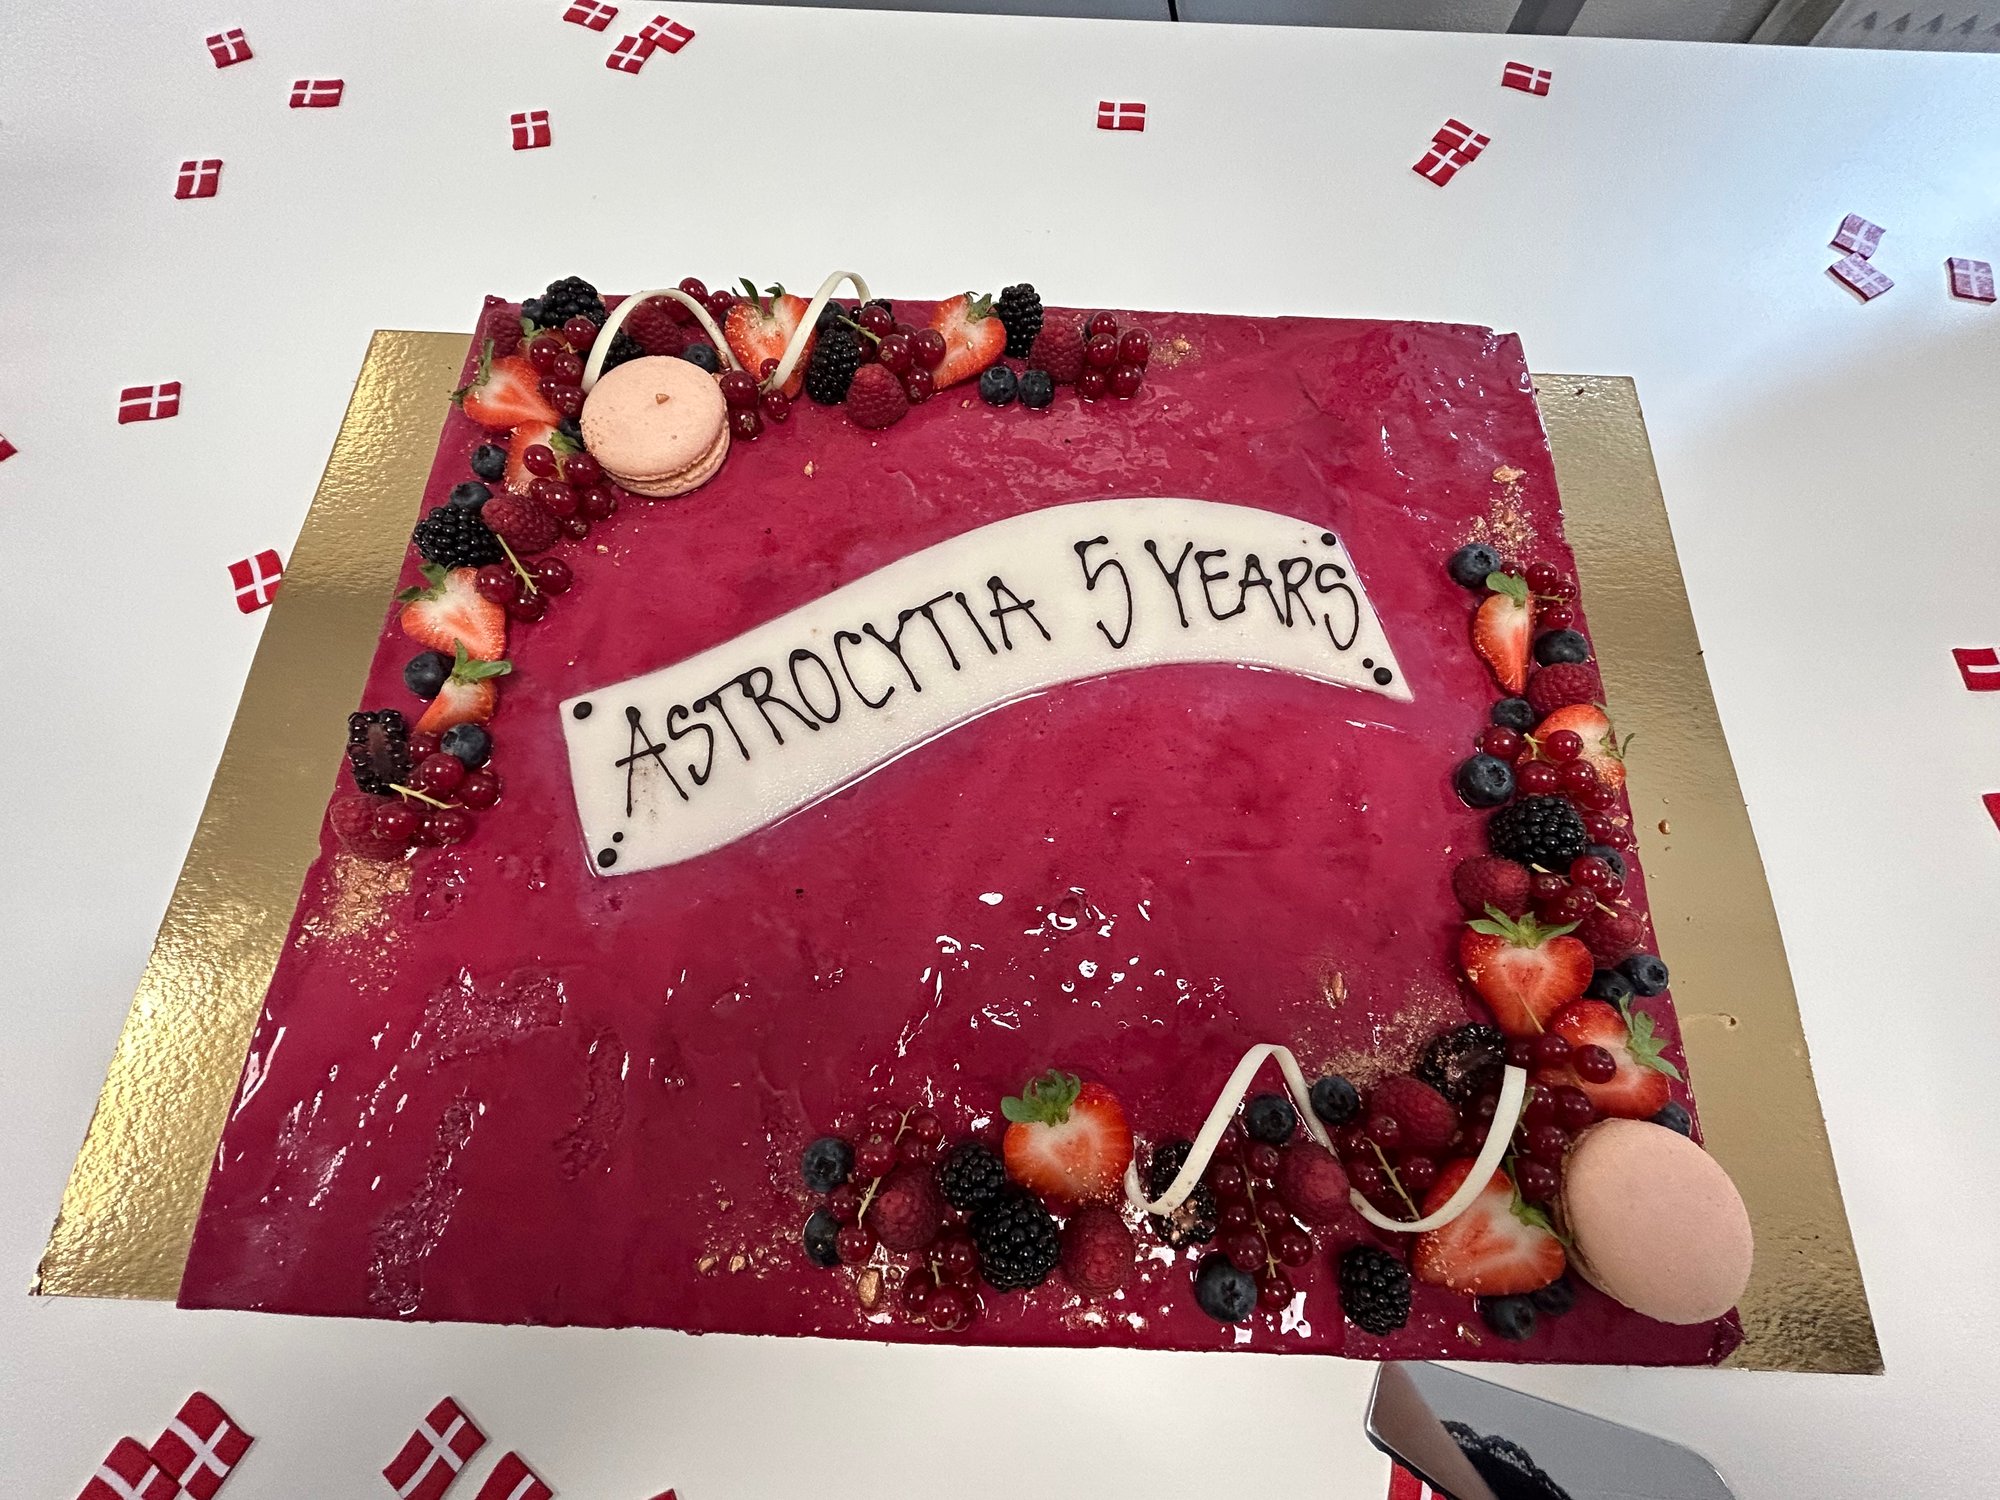 Astrocytia 5 years reception cake